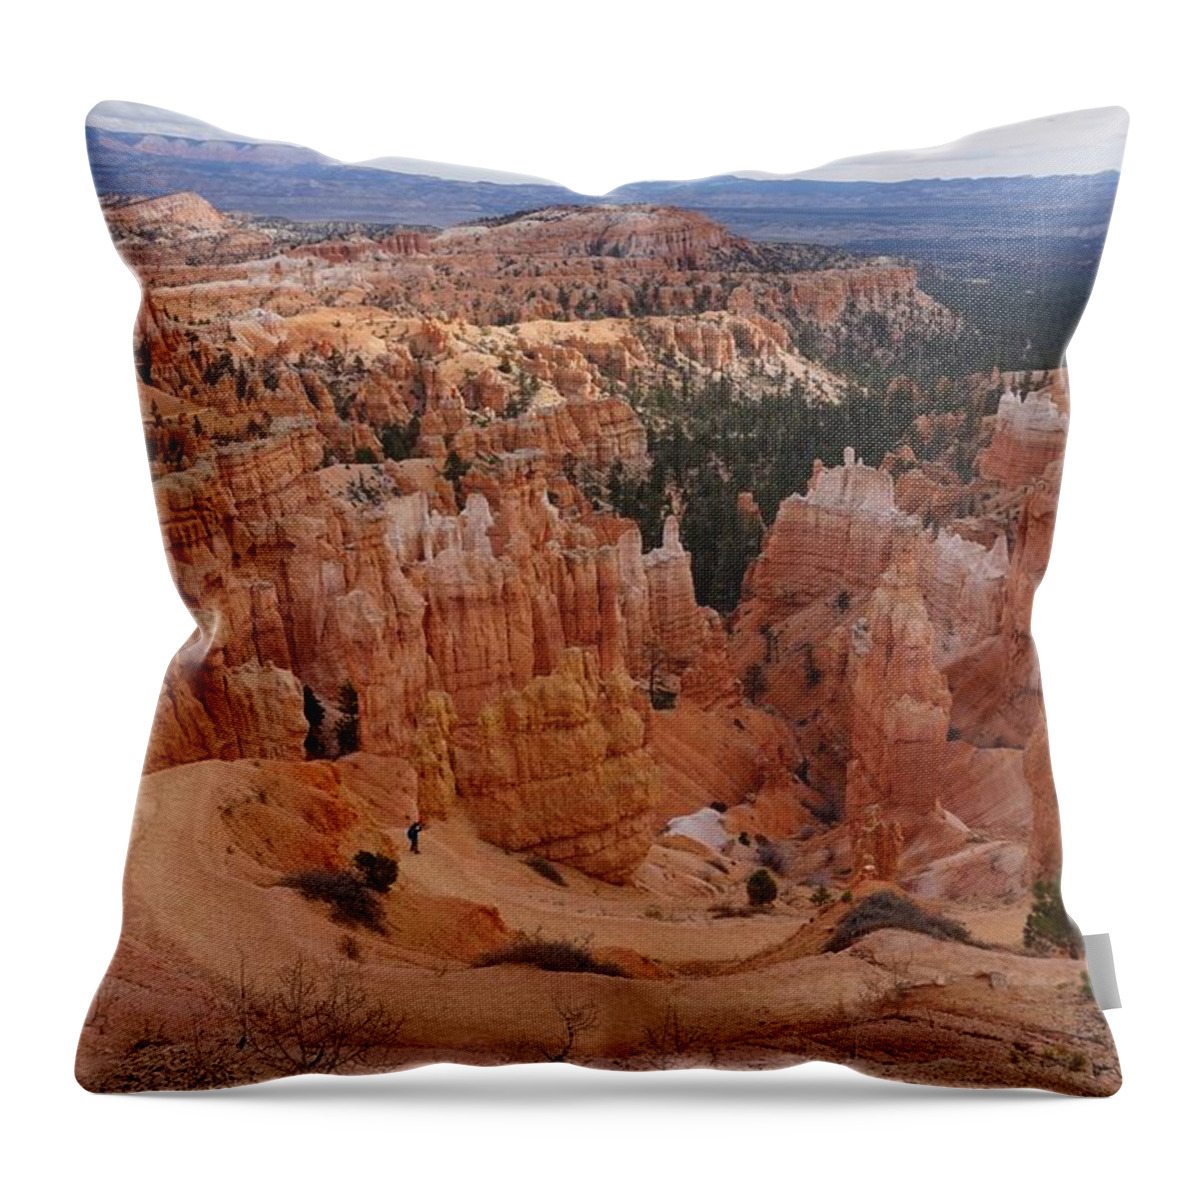 Bryce Canyon National Park Throw Pillow featuring the photograph Bryce Canyon National Park - Hiking Trail by Yvonne Jasinski